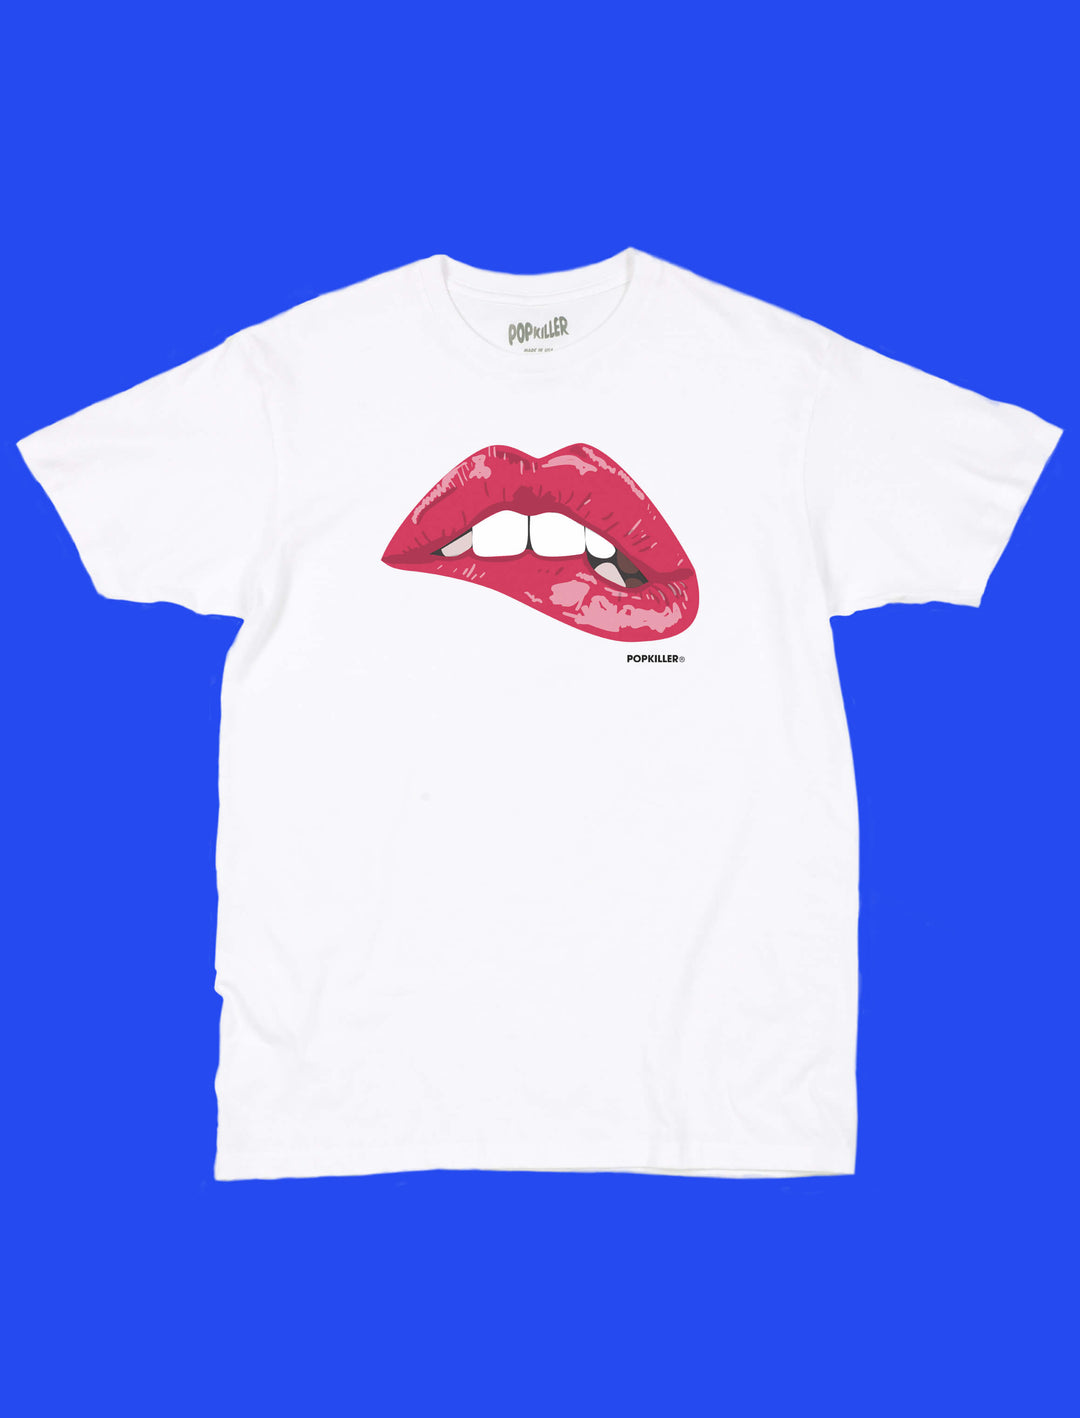 Popkiller sexy lip bite with glossy lips t-shirt.